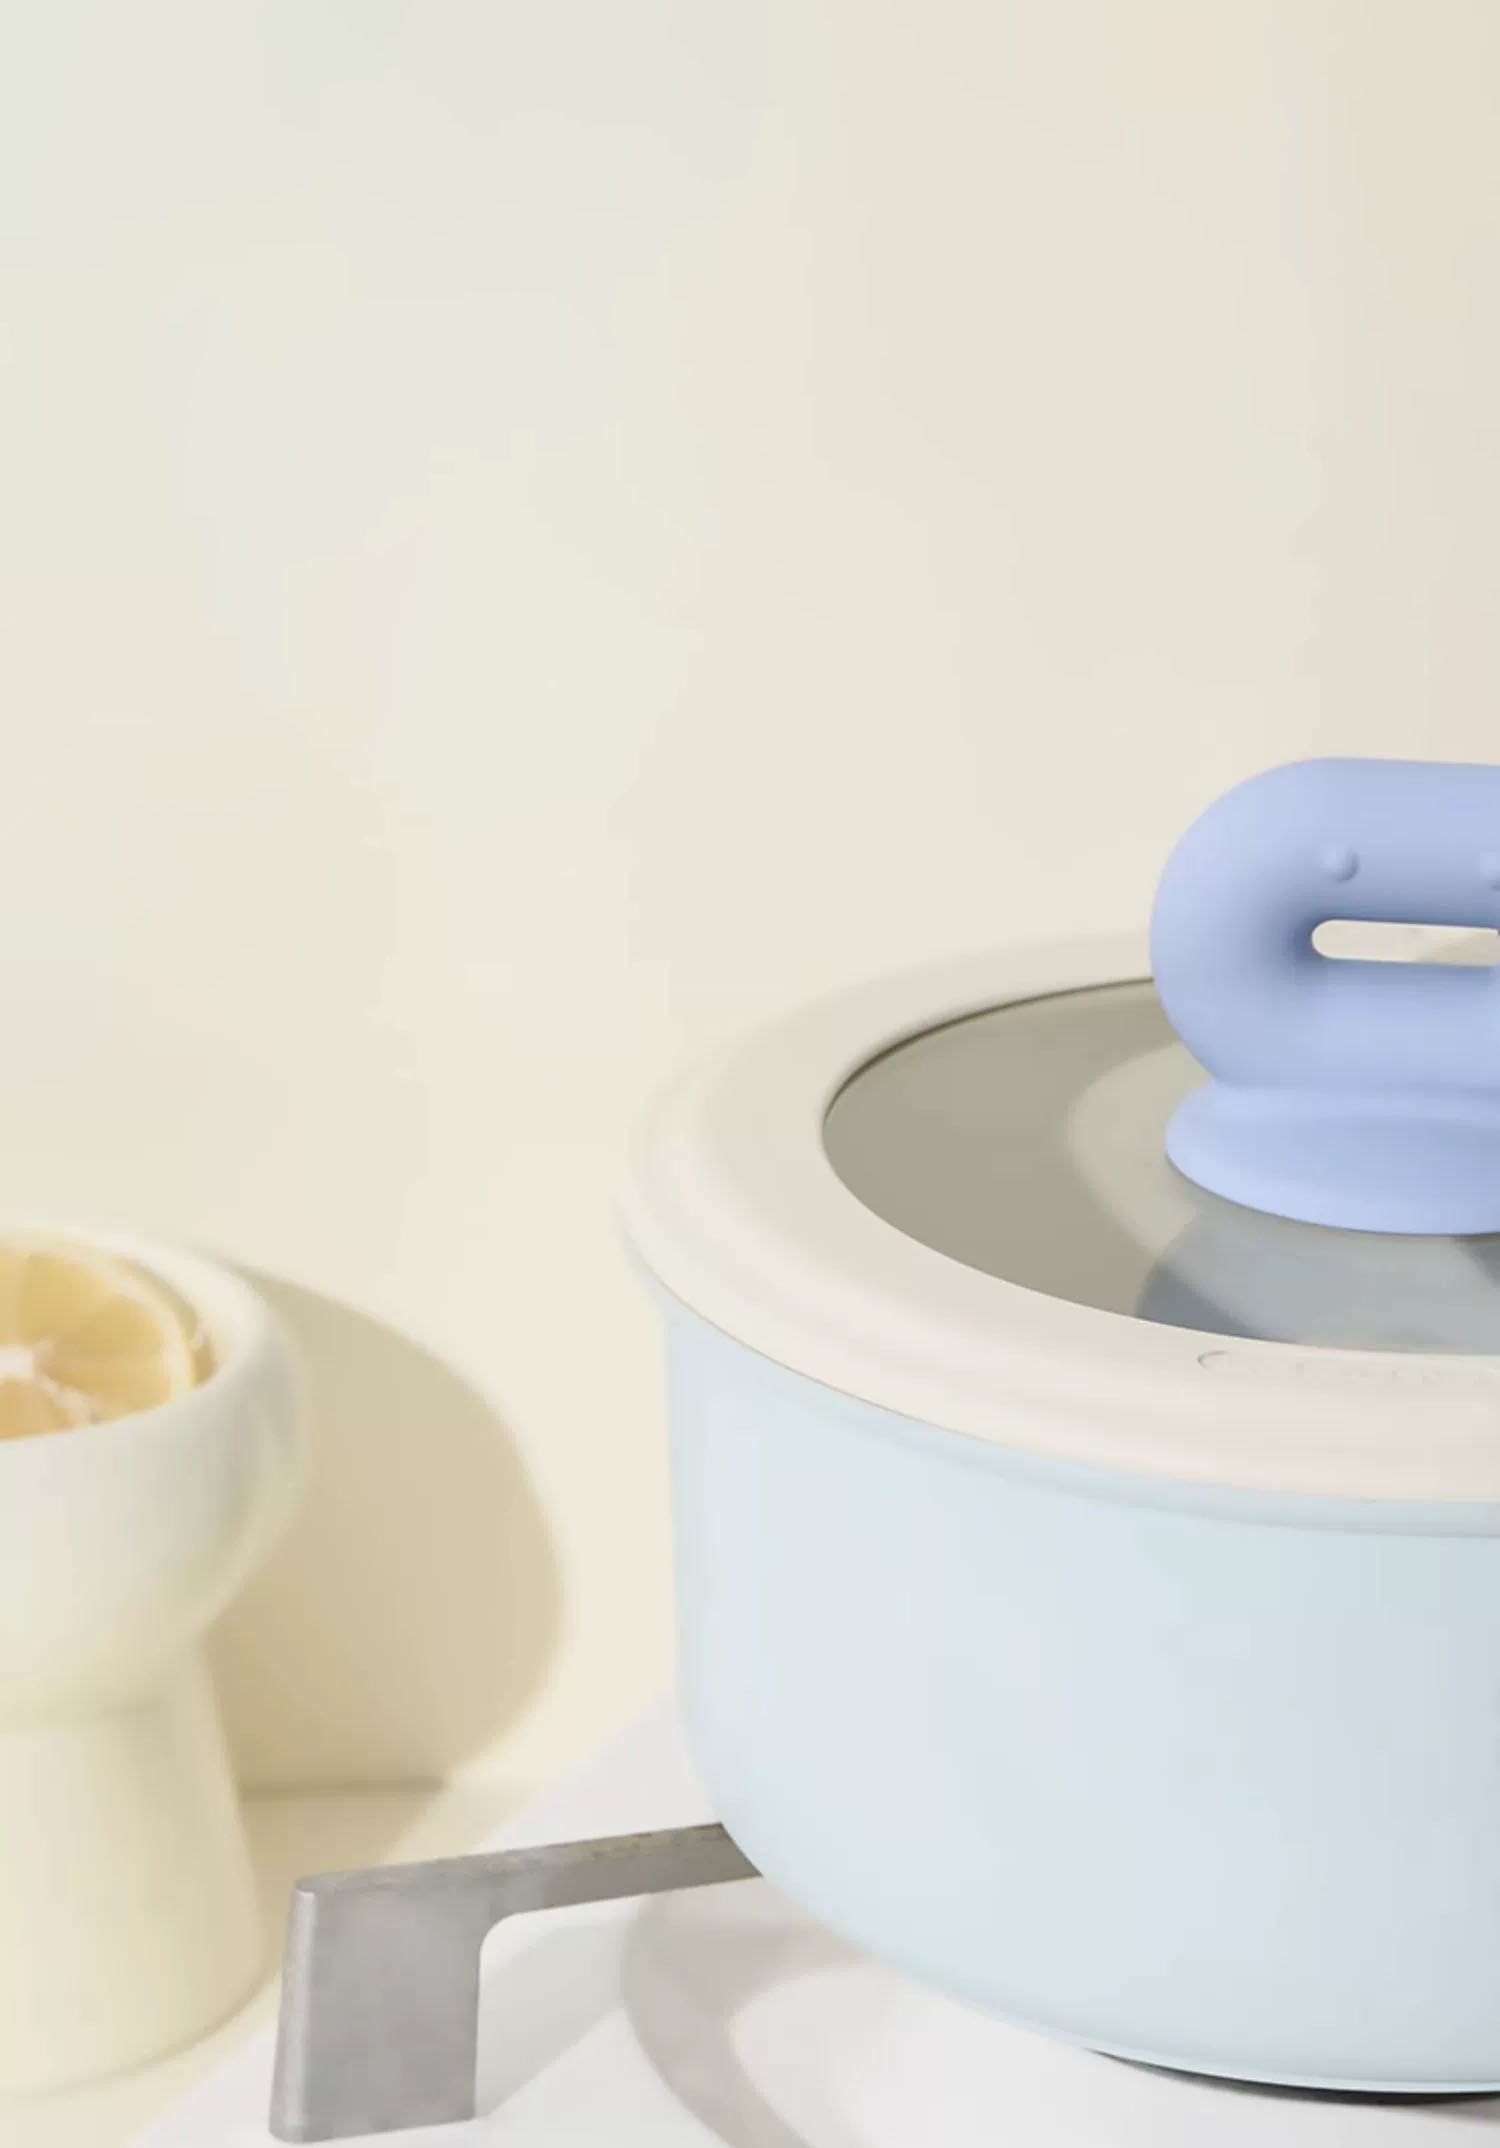 Pastel Blue Milk Steam Pot from CAROTE